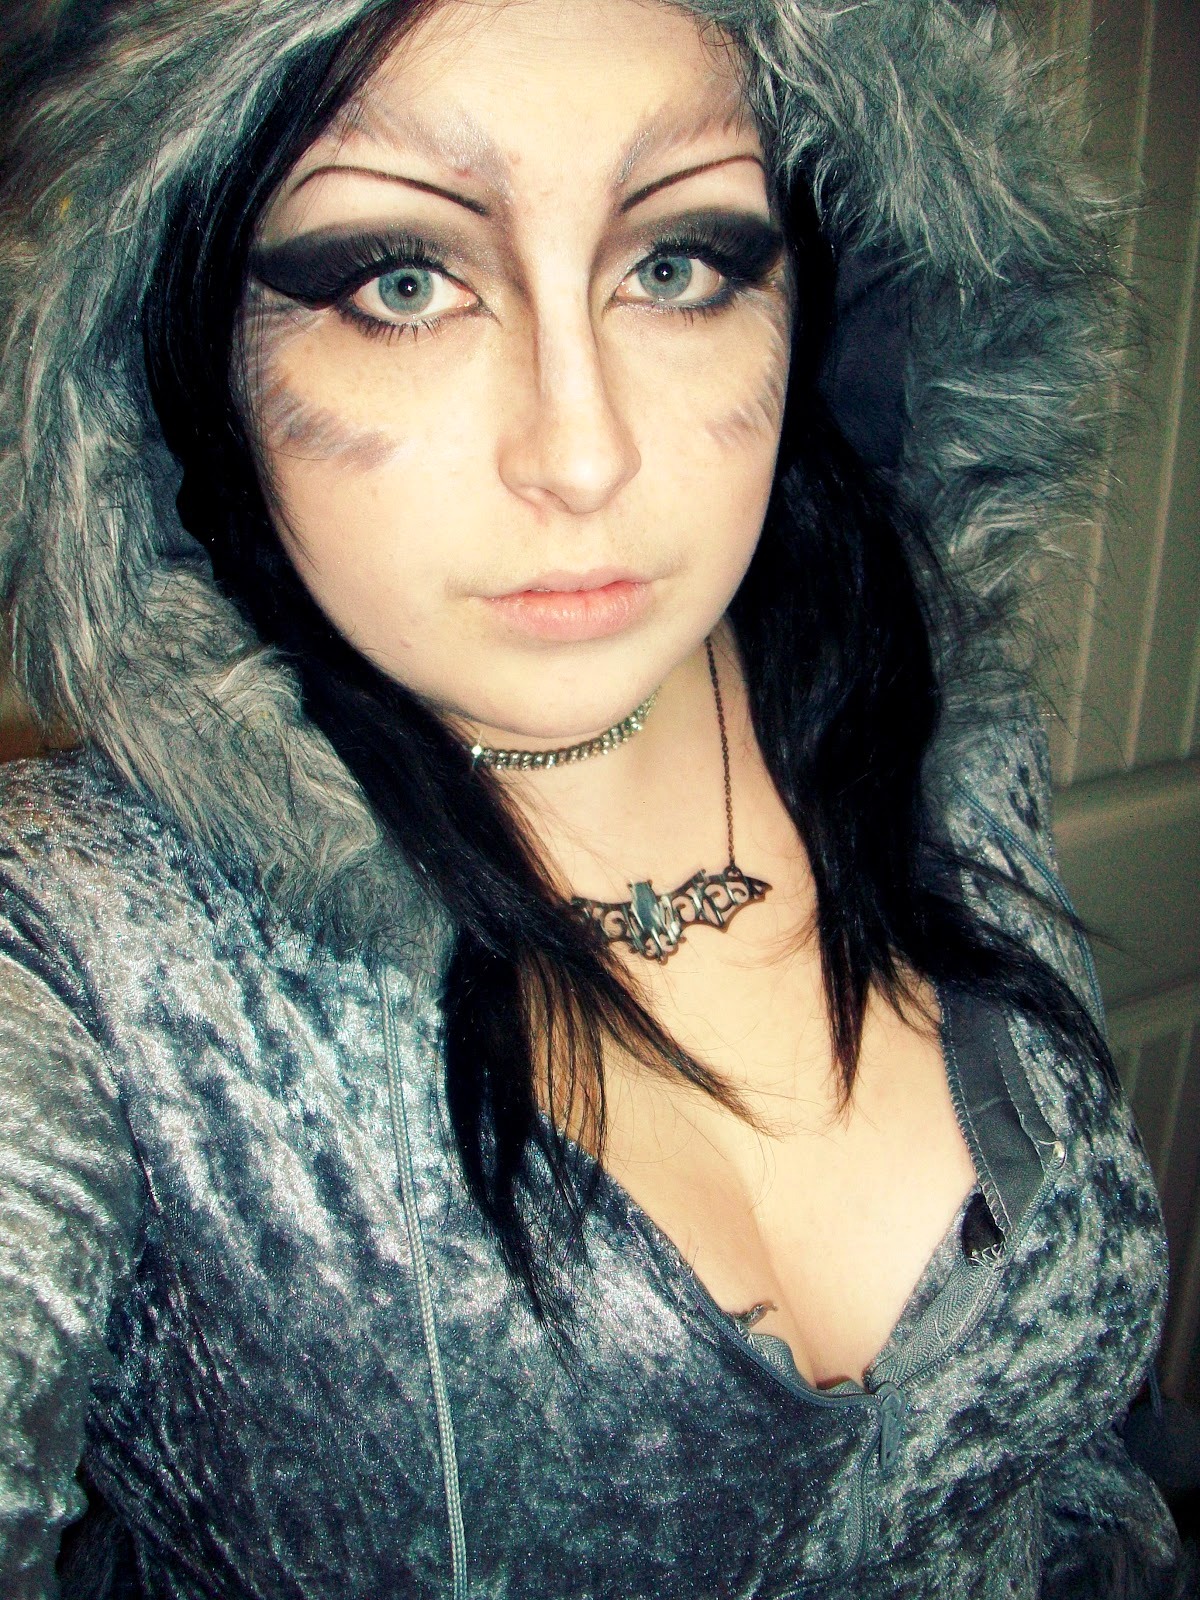 Big Bad Wolf Halloween Makeup